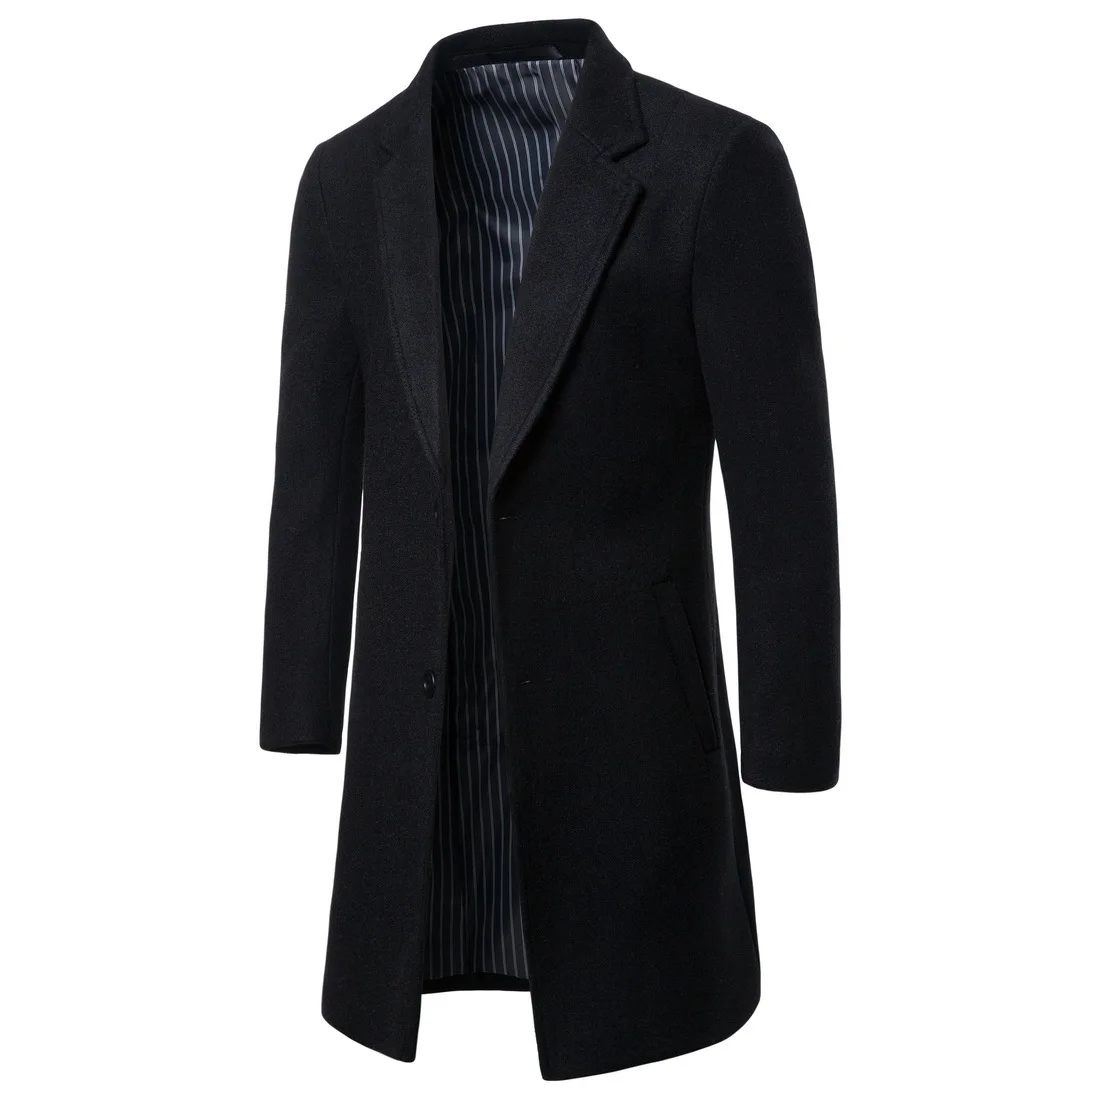 

2019 Autumn And Winter New Style Export Overcoat Large Size Woolen Overcoat England Coat Jj-yf601